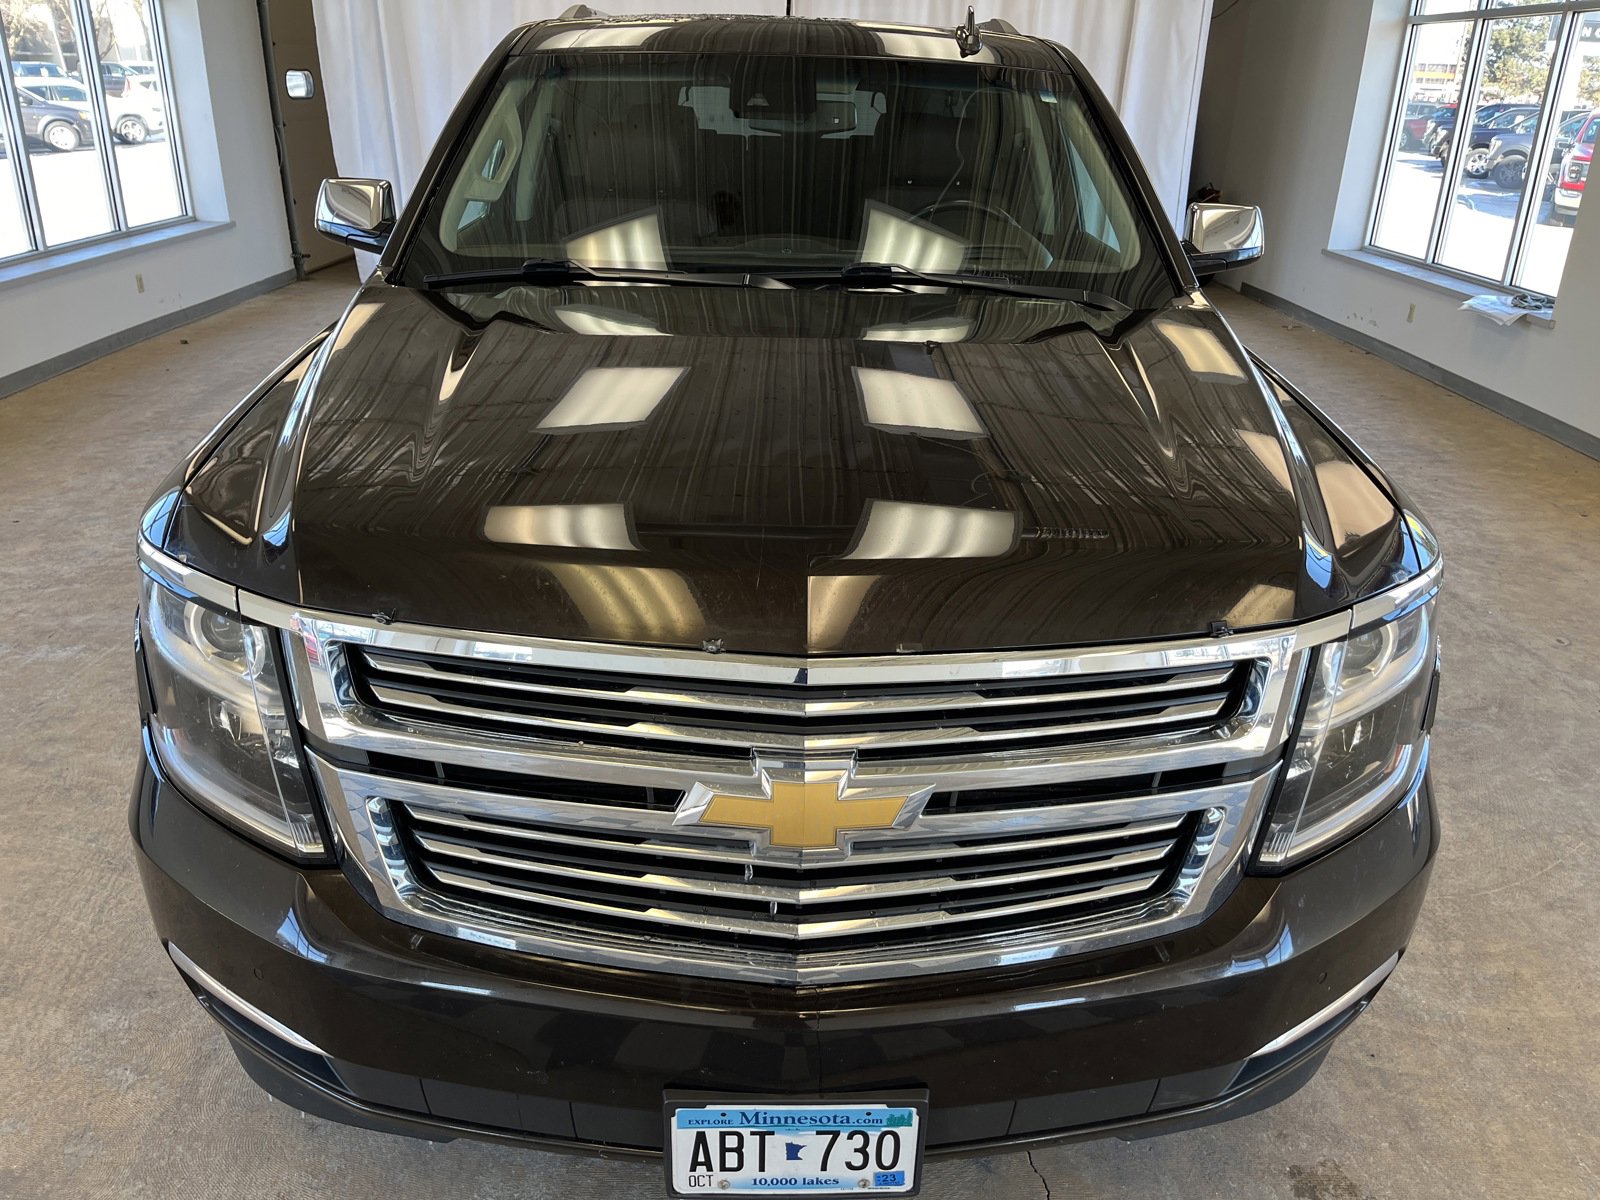 Used 2018 Chevrolet Suburban Premier with VIN 1GNSKJKC6JR138517 for sale in Alexandria, Minnesota